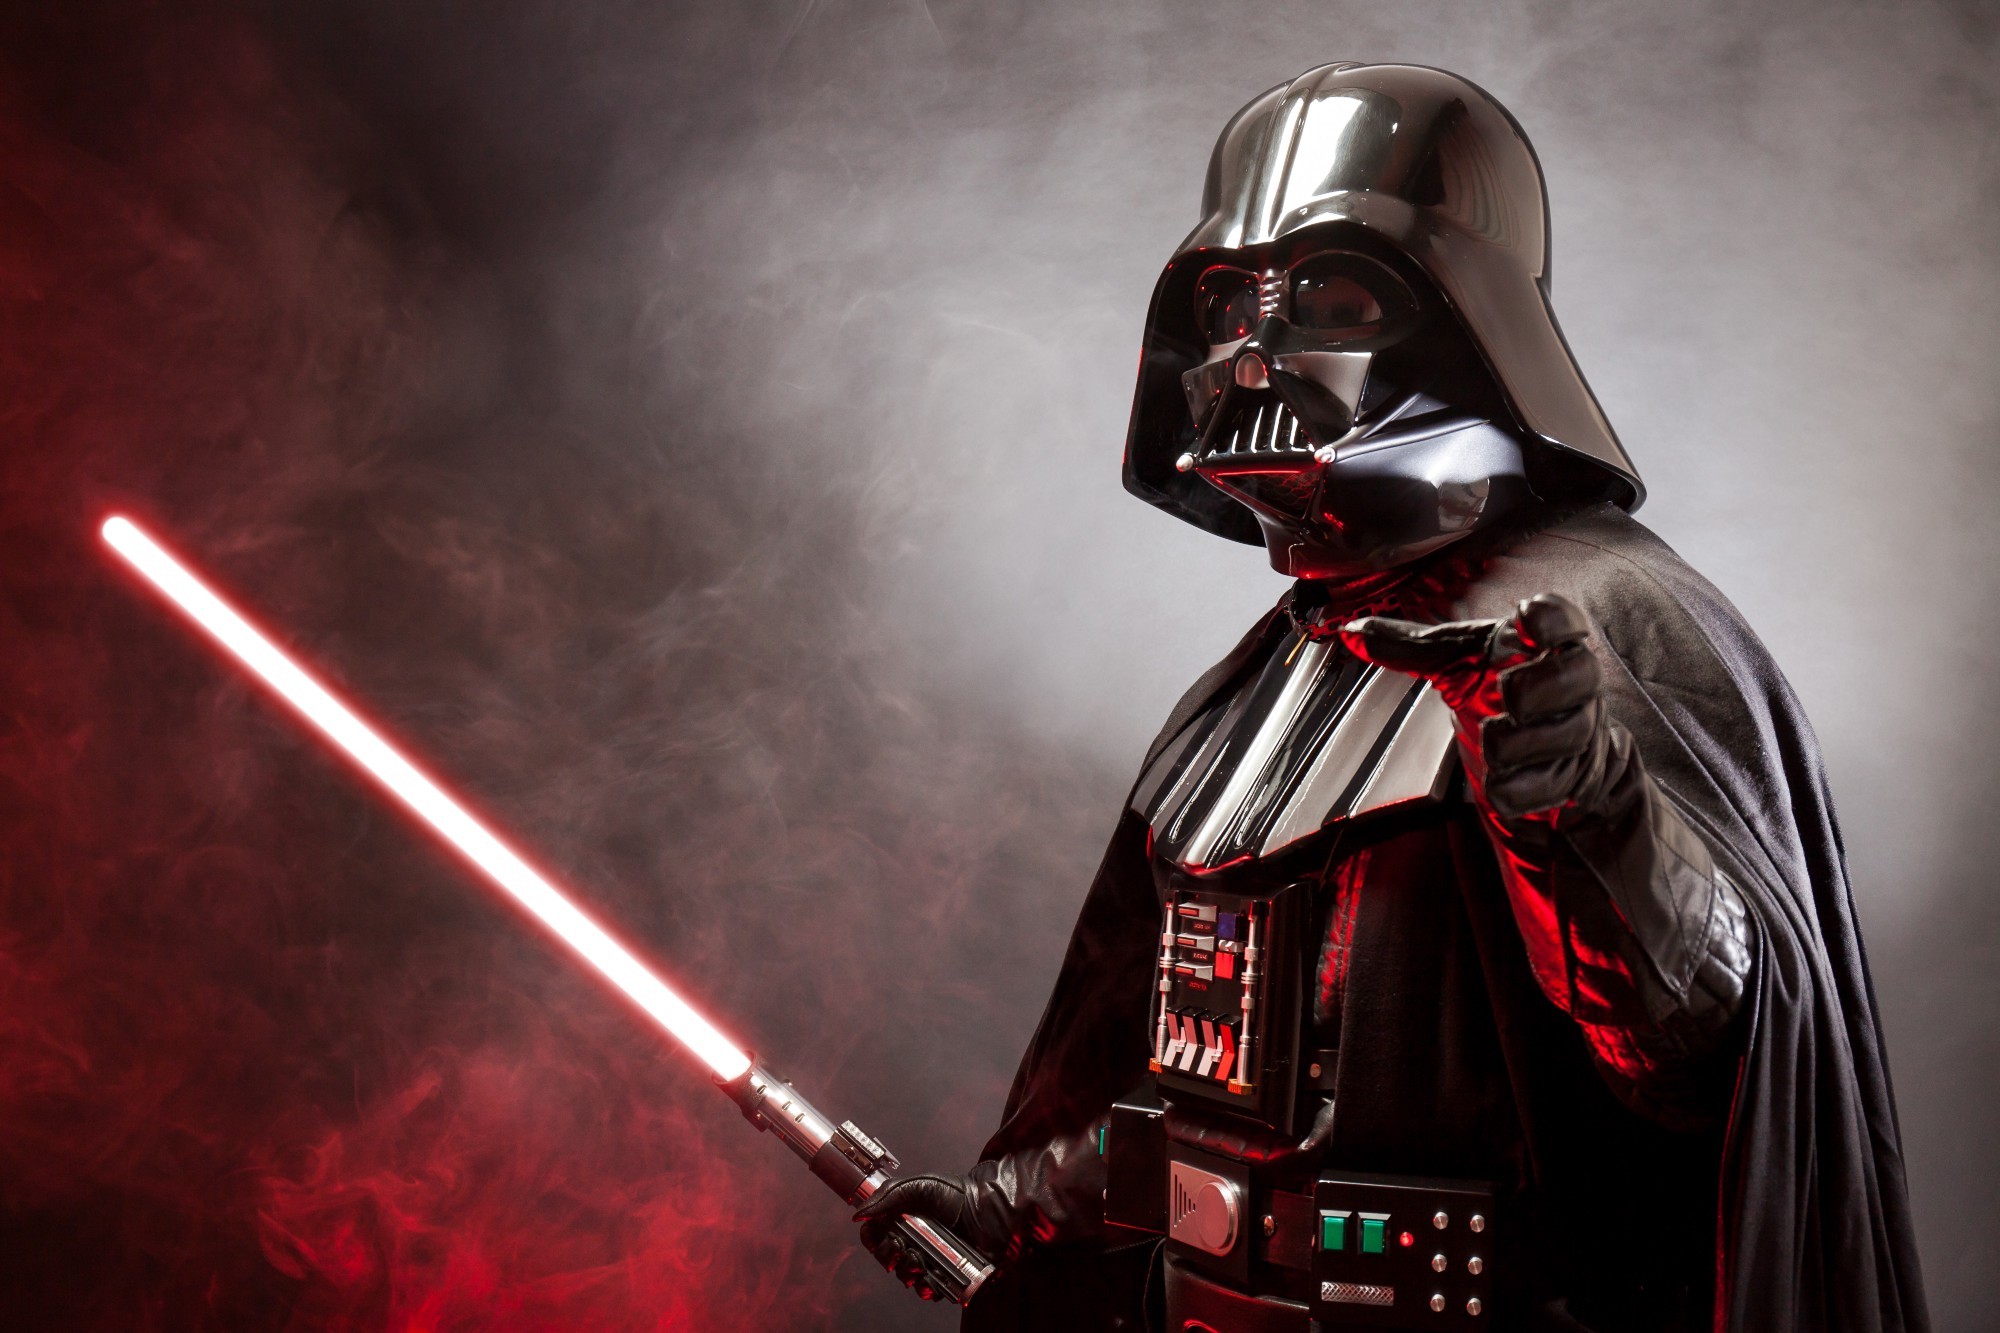 General 2000x1333 movies Star Wars Darth Vader Star Wars Villains Sith lightsaber science fiction